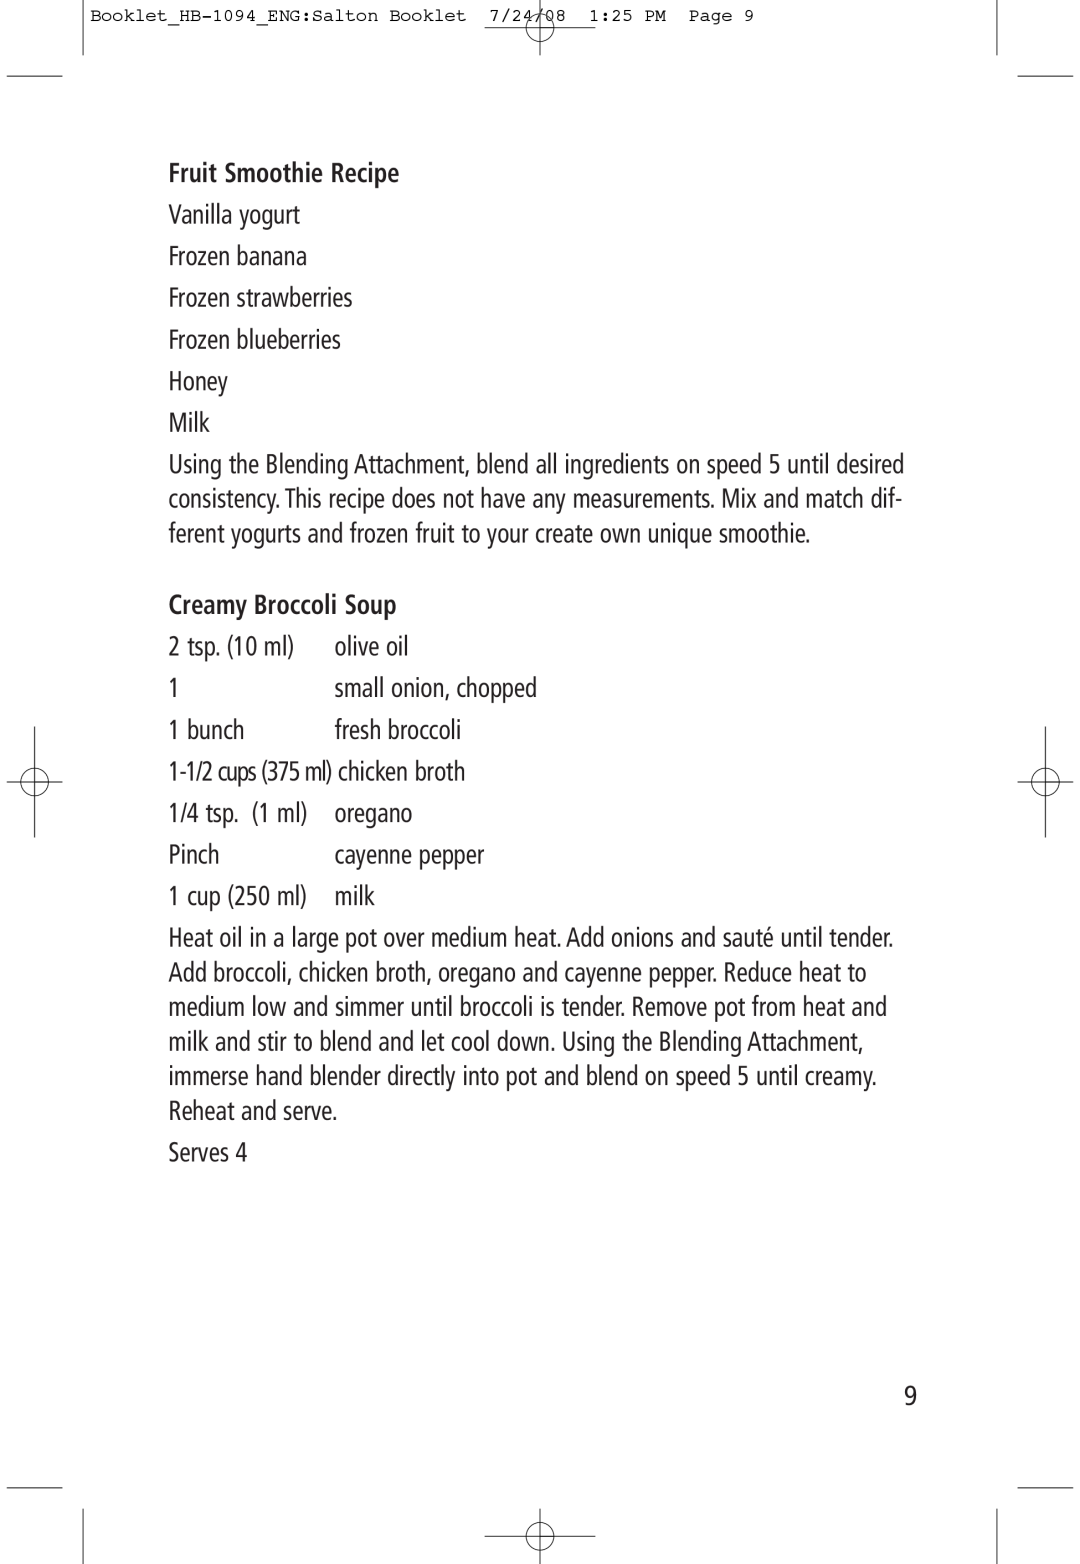 Salton HB-1094 manual Fruit Smoothie Recipe, Creamy Broccoli Soup 